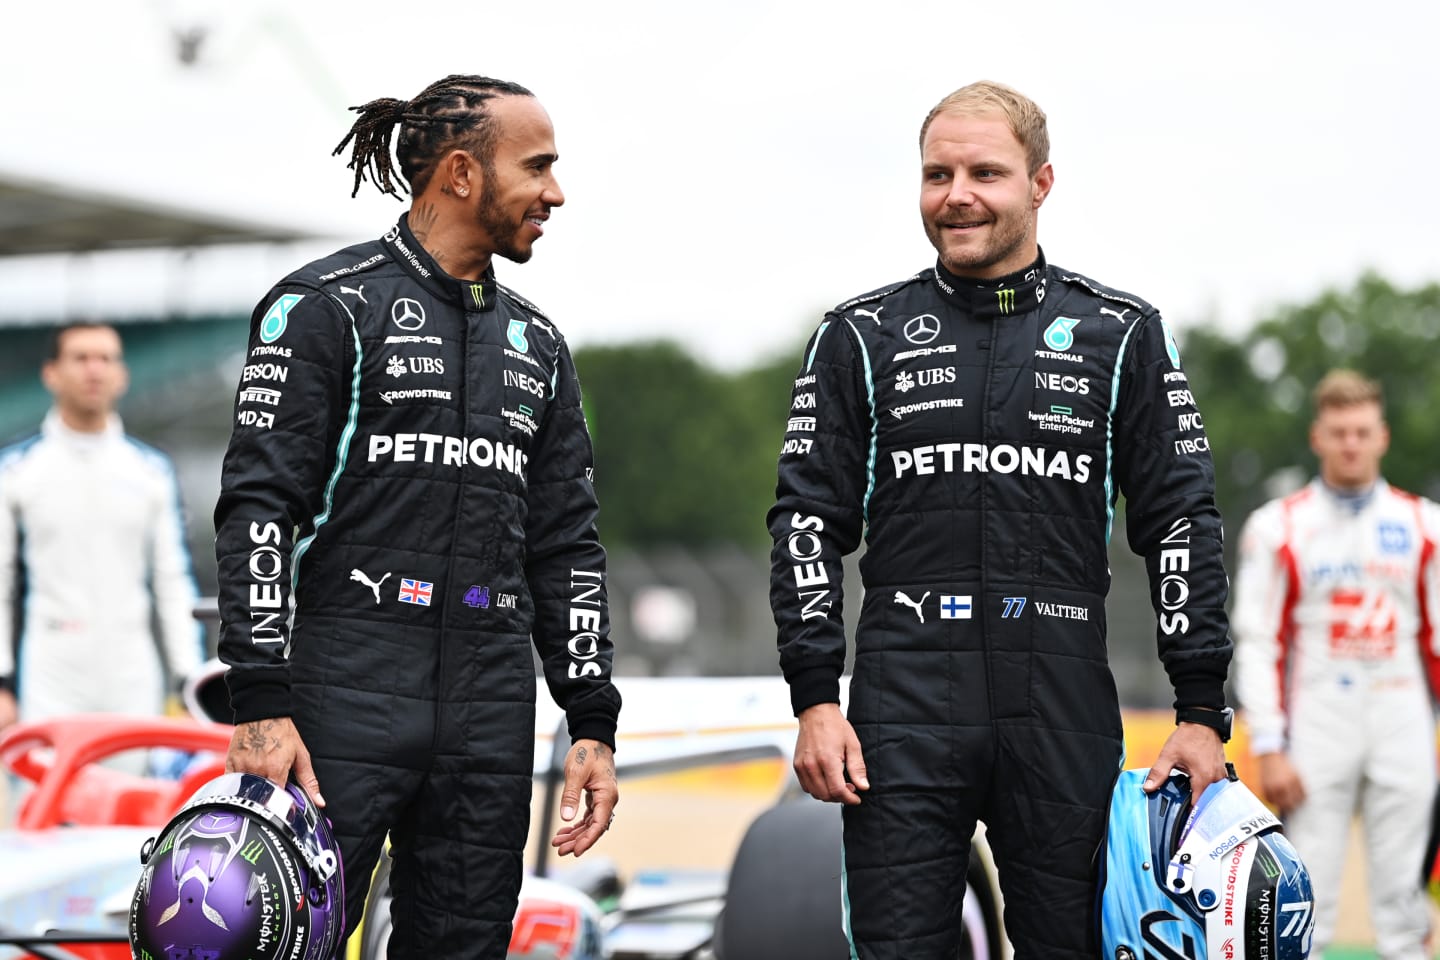 NORTHAMPTON, ENGLAND - JULY 15: Lewis Hamilton of Great Britain and Mercedes GP and Valtteri Bottas